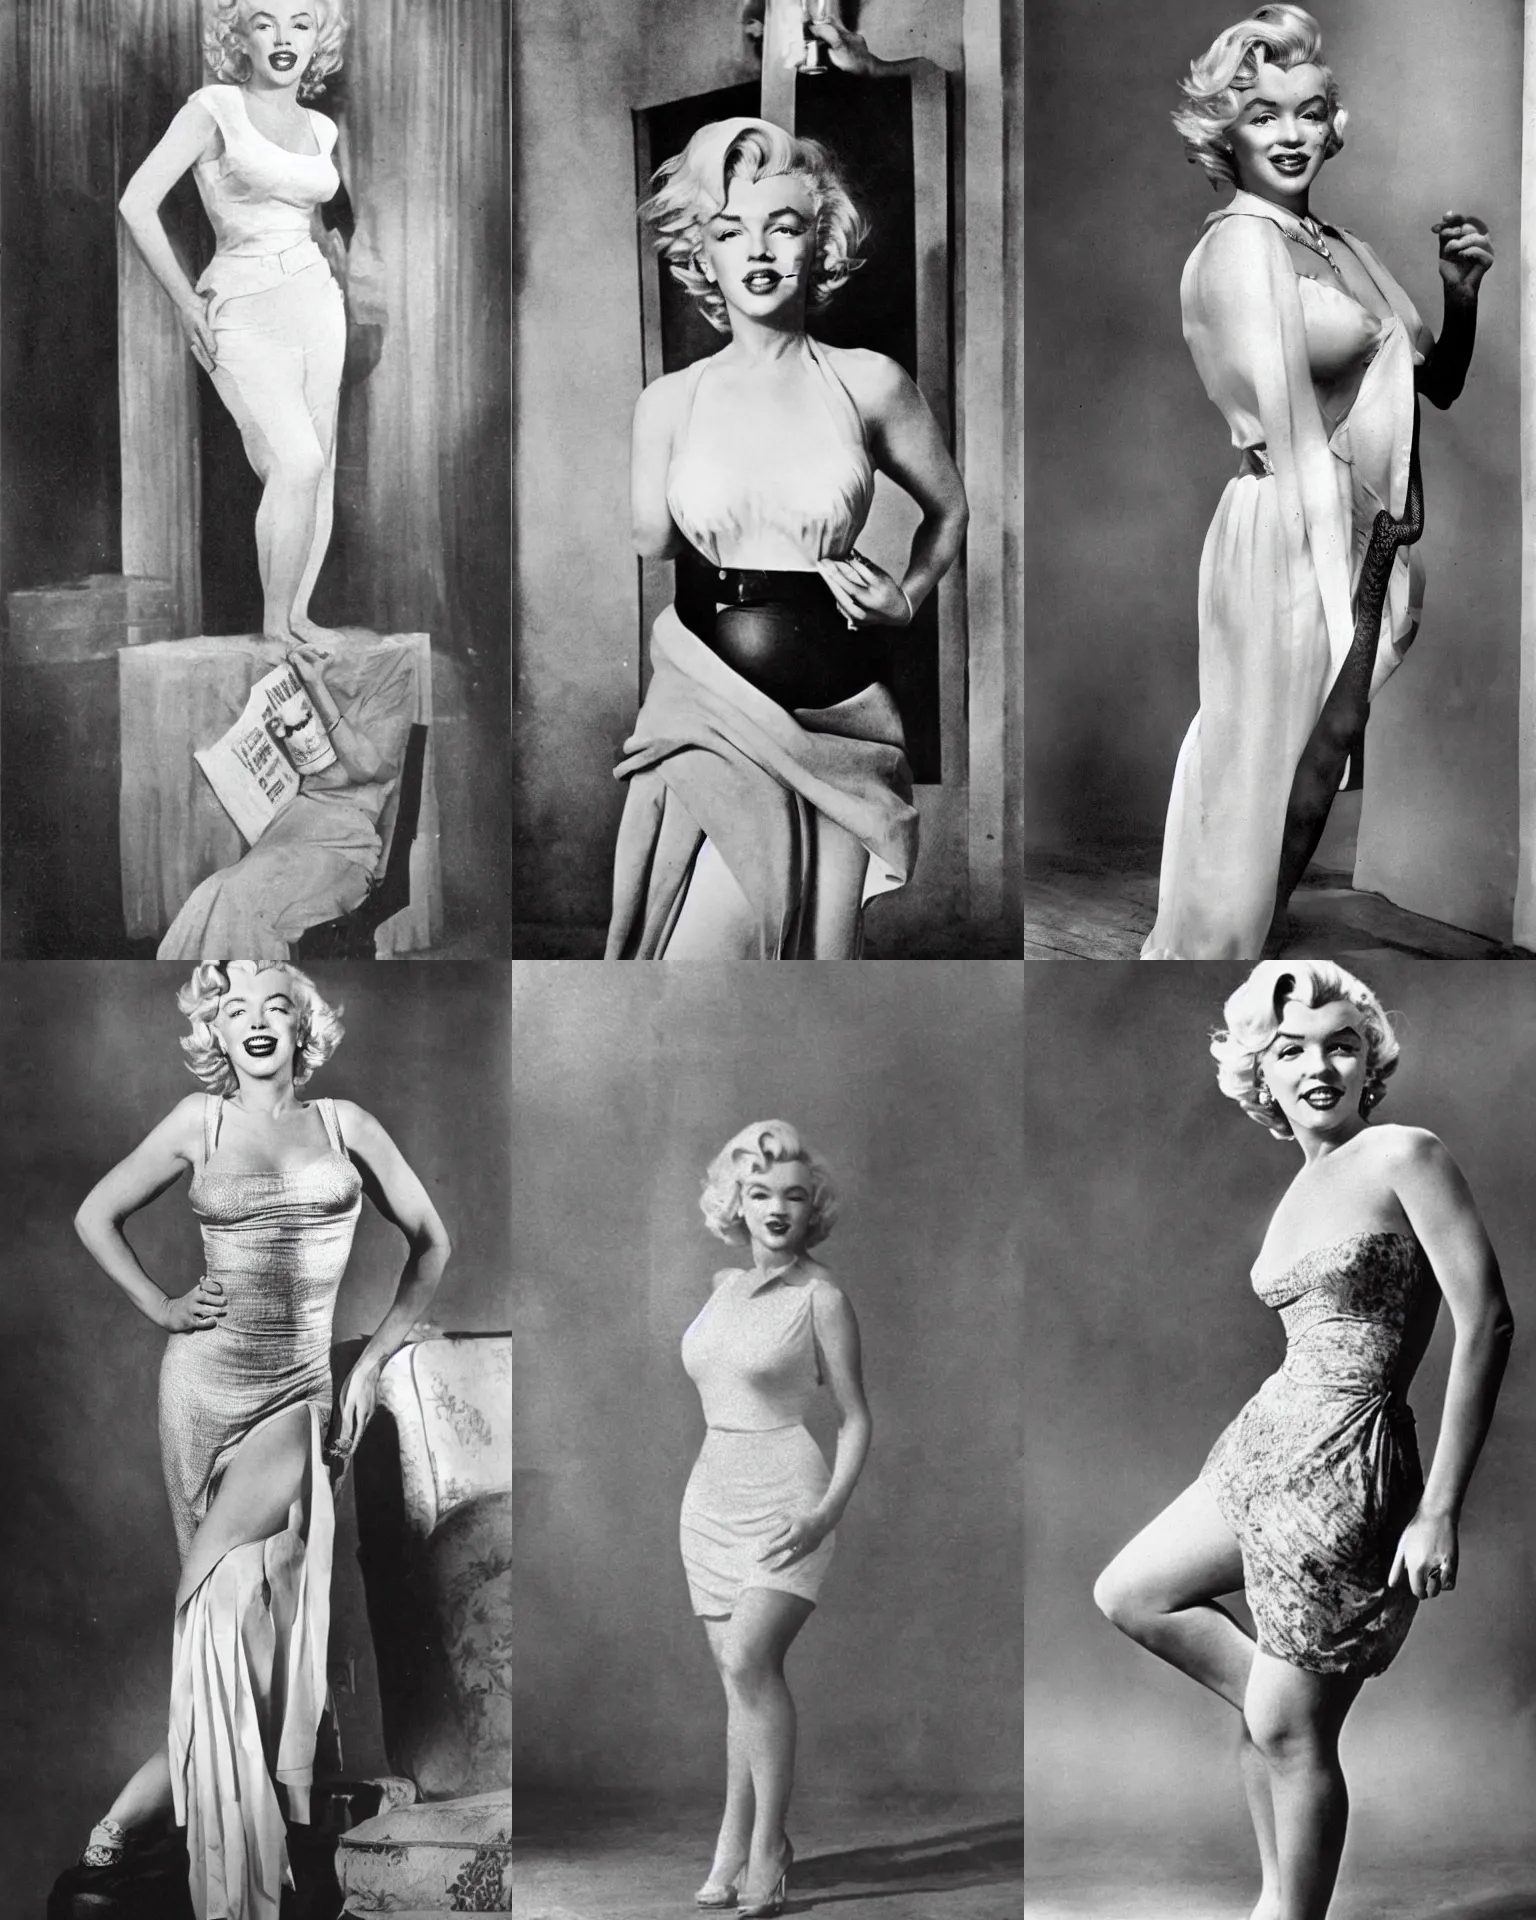 Prompt: Long shot full body portrait of Marilyn Monroe starring as successful SNAKE OIL SALESMAN circa 1869